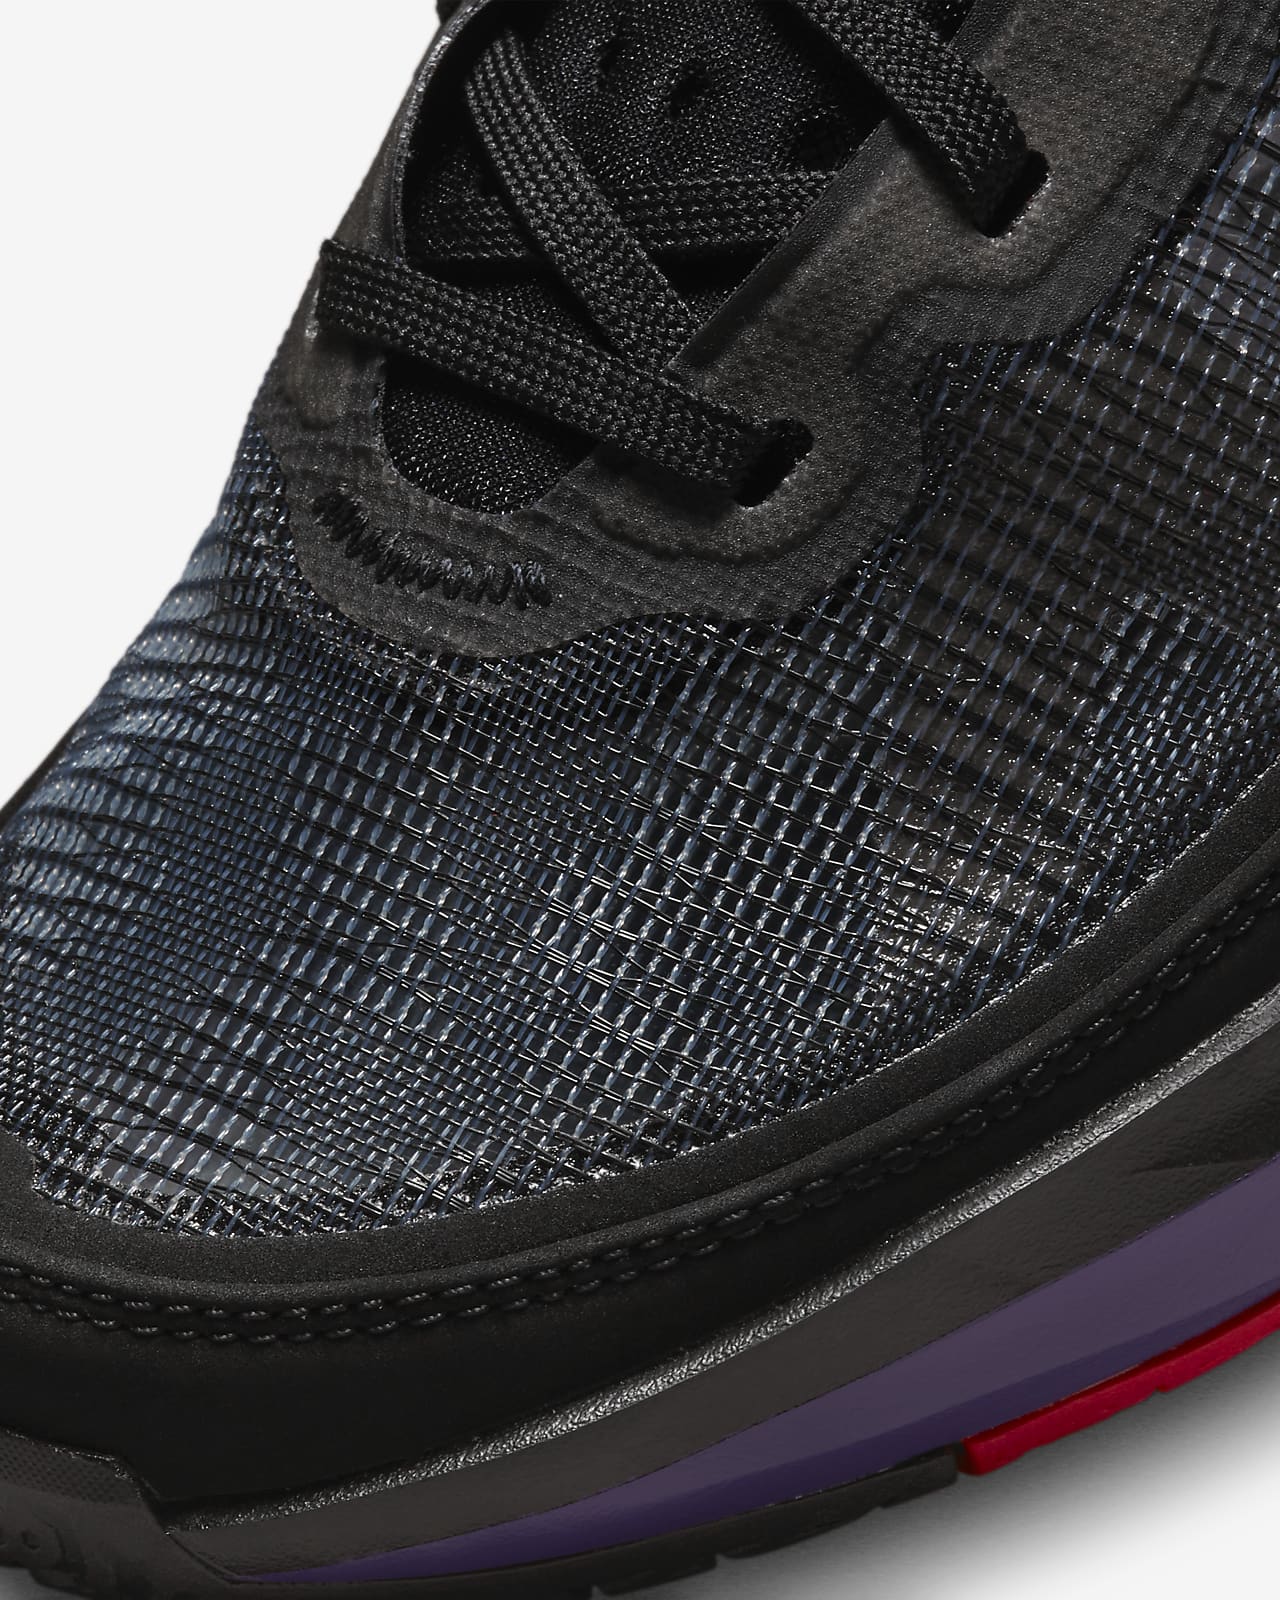 Bruin Onderzoek Grillig Air Jordan XXXVII Basketball Shoes. Nike.com